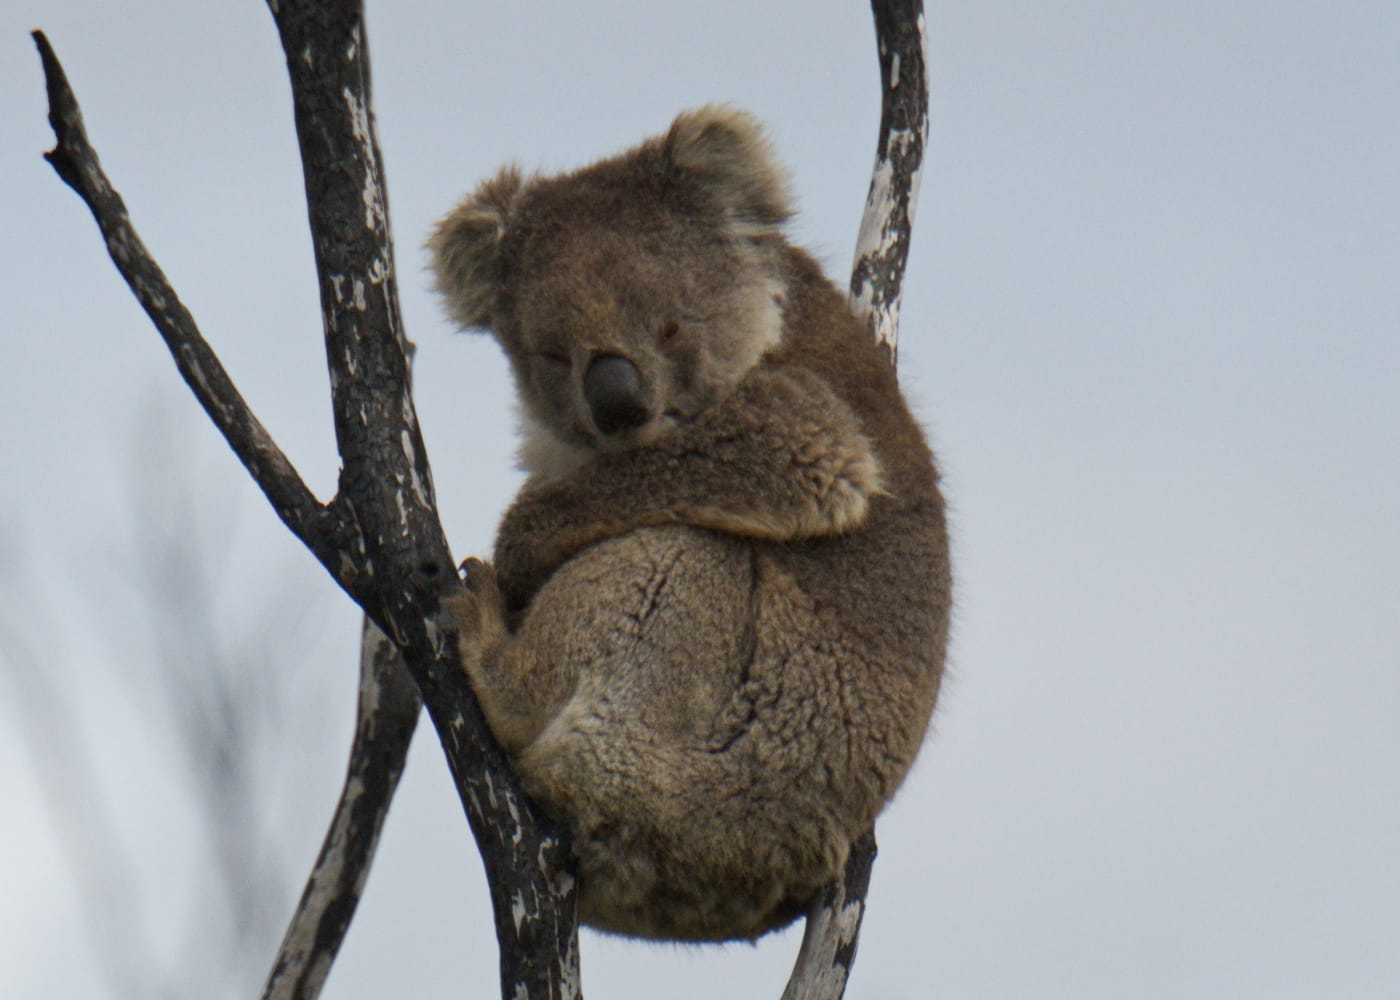 Koala clings to a tree in Kangaroo Island